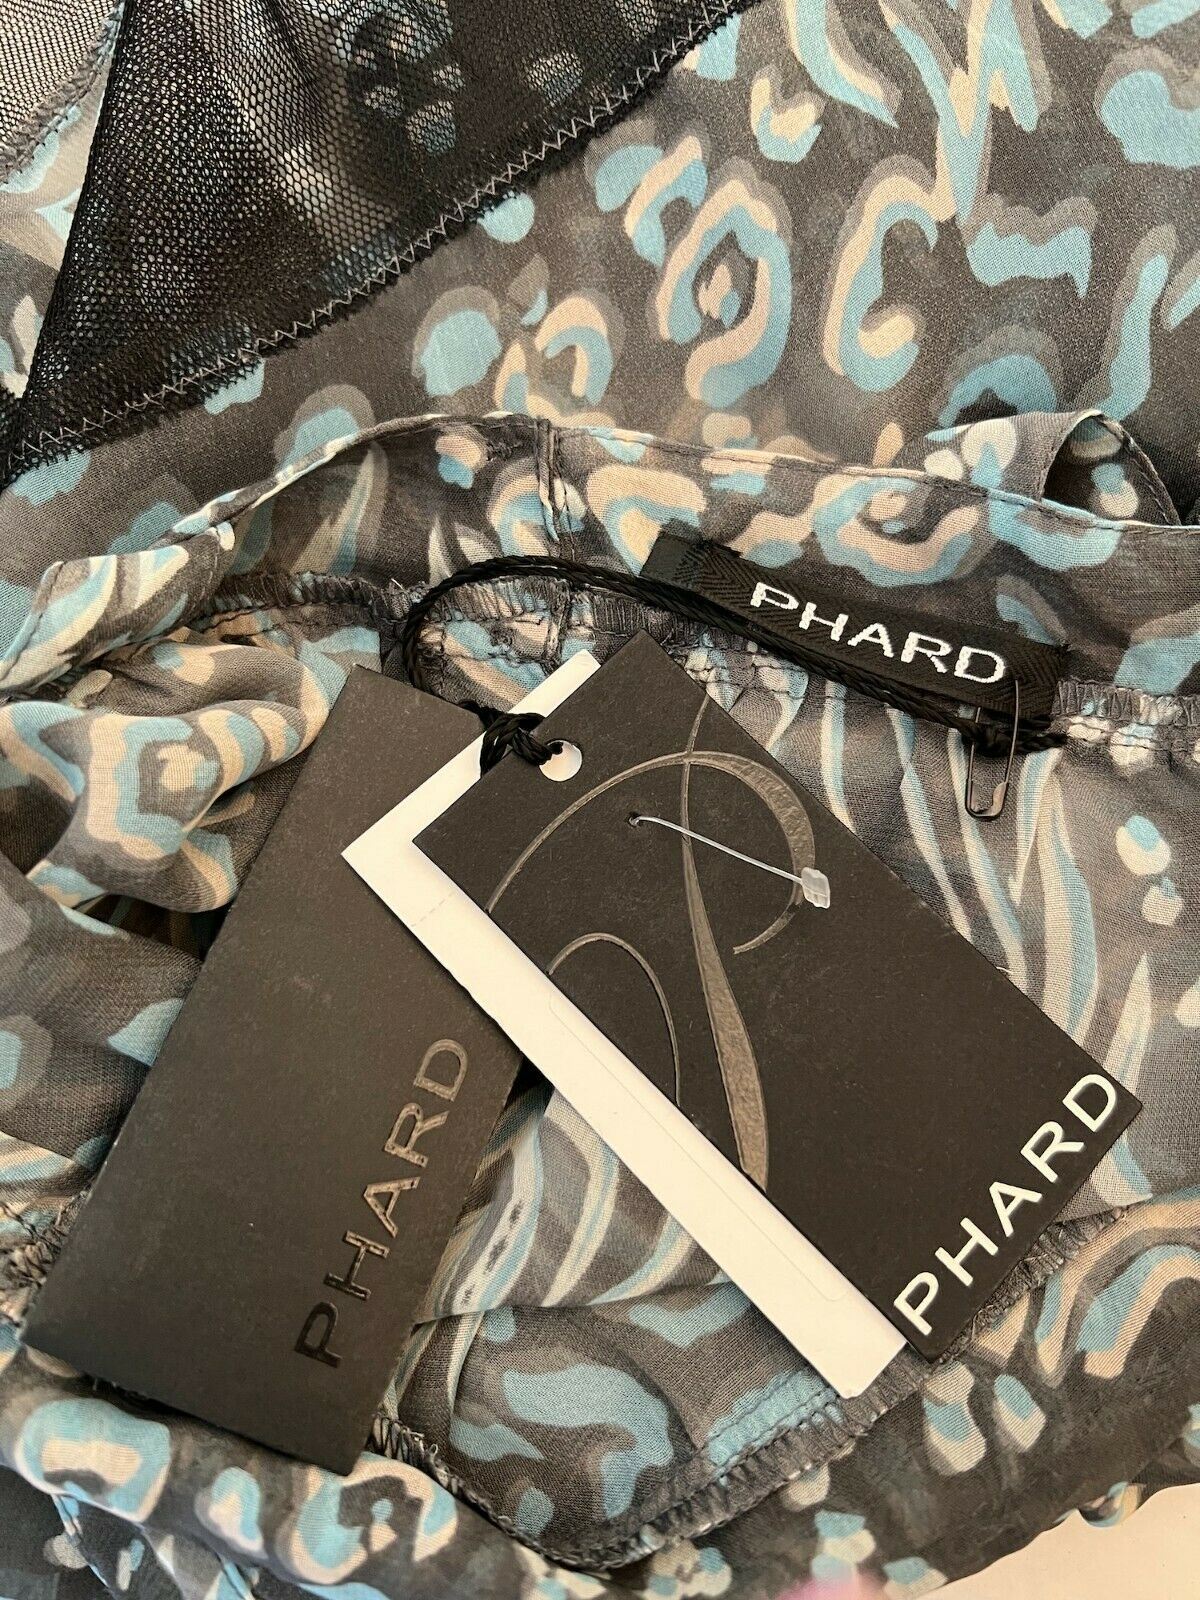 Phard Blue & Grey Chiffon Cami Top Size M Approx UK 8/10 US 4/6 EU 36/38 BNWT Timeless Fashions